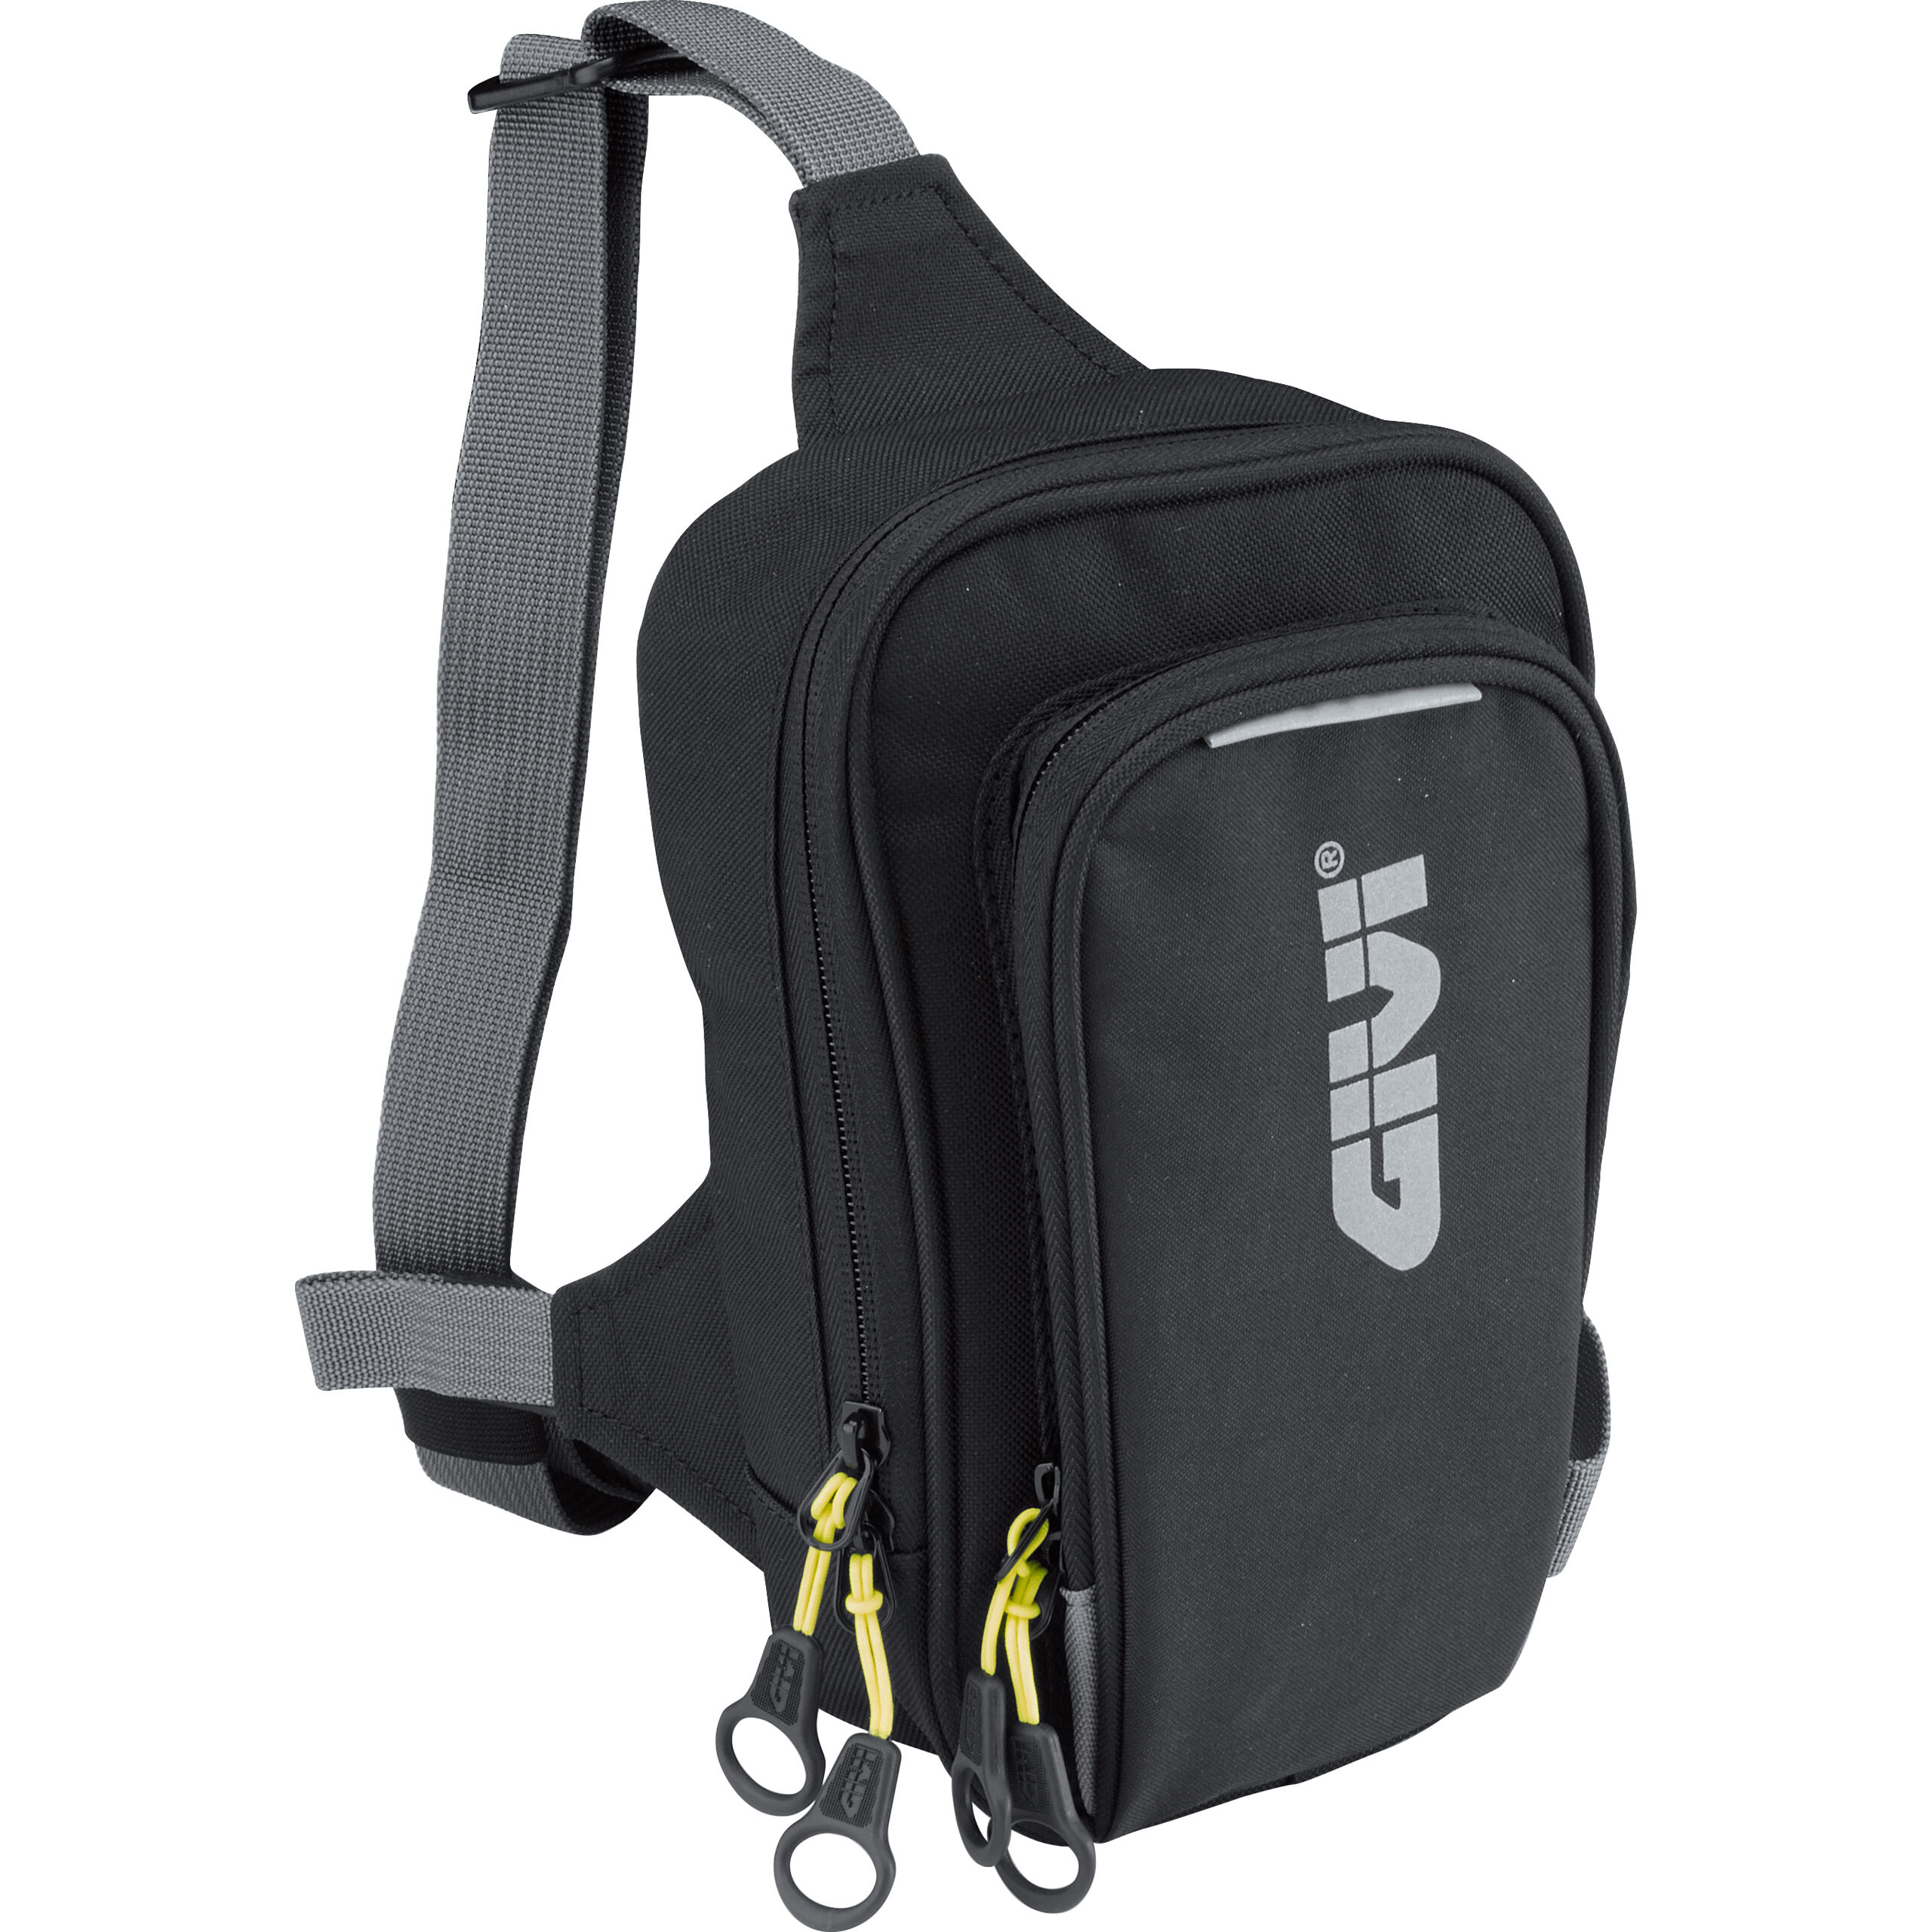 Givi leg pocket Easy Bag XL 2 liter EA113B for EUR 40.50 | POLO 